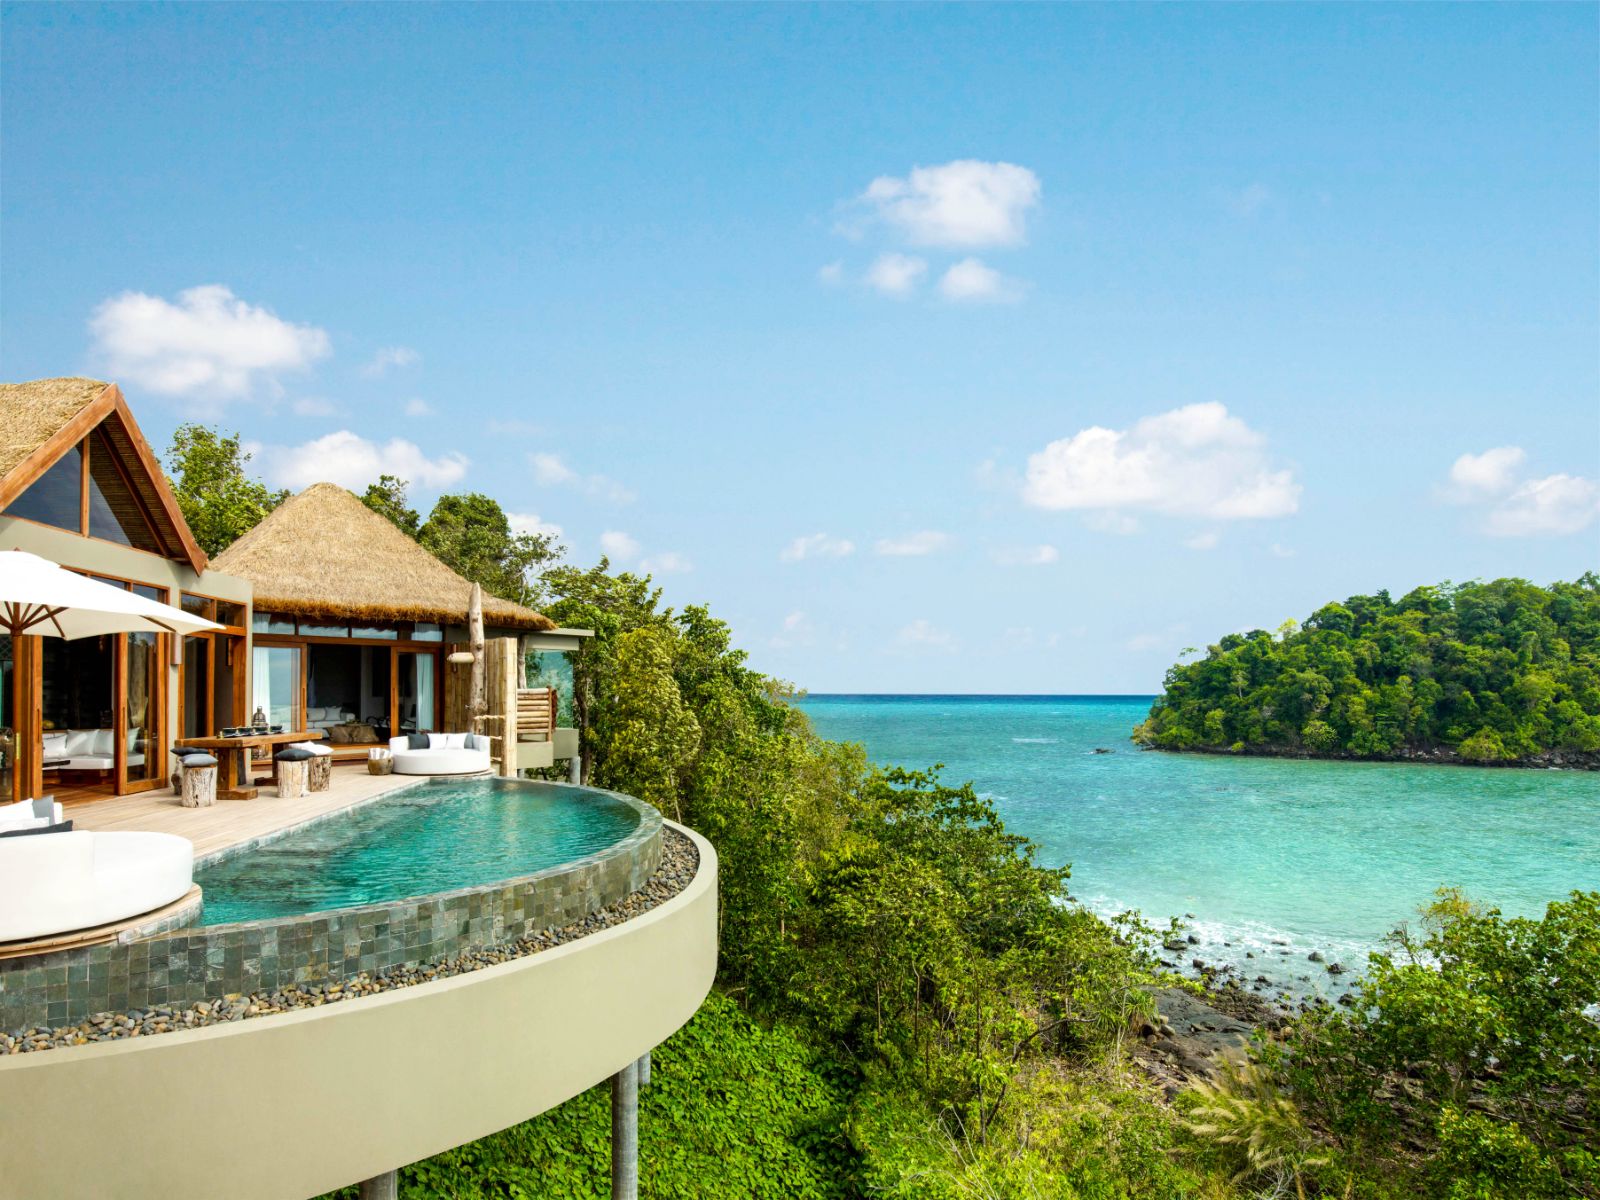 Two bedroom jungle villa at luxury resort Song Saa